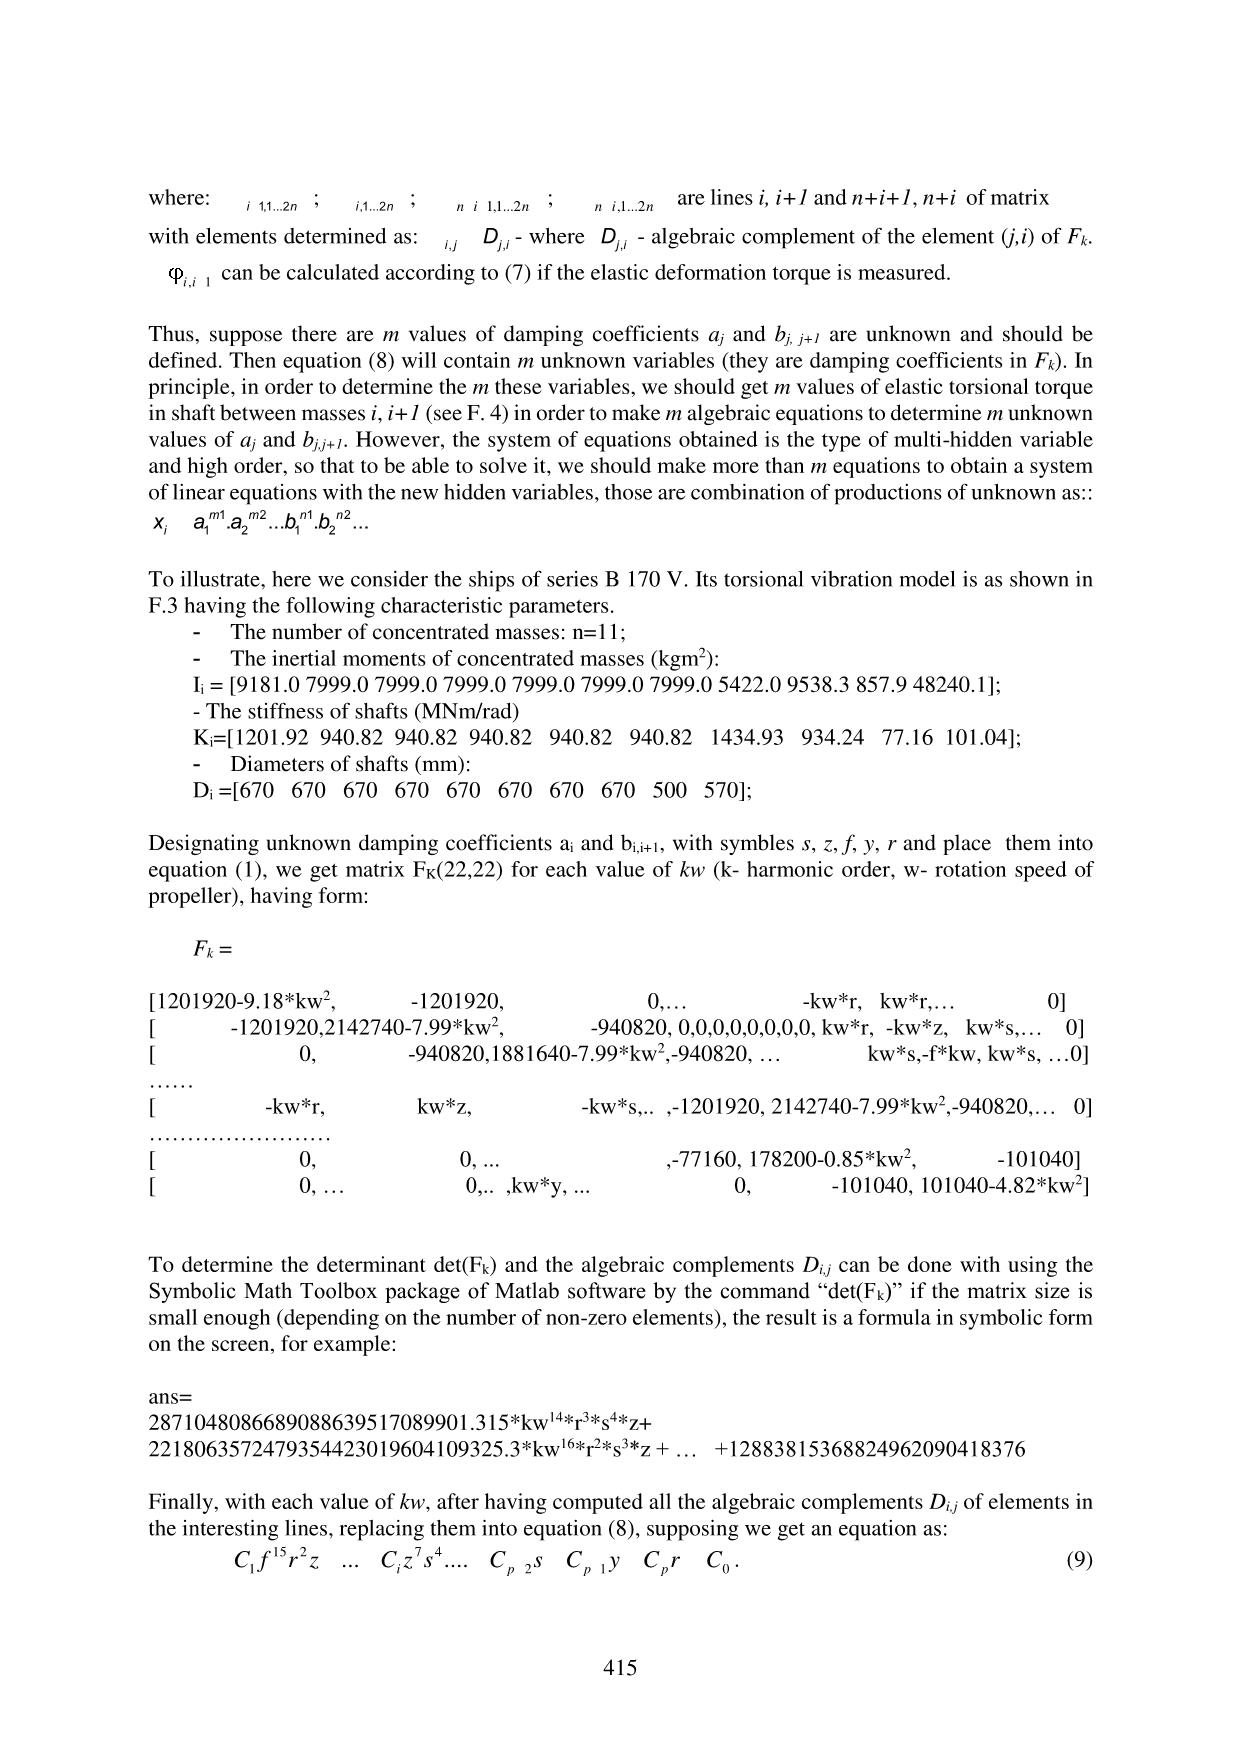 The determining torsional vibration damping coefficients algorithm for computing marine shafting’s vibrations trang 5